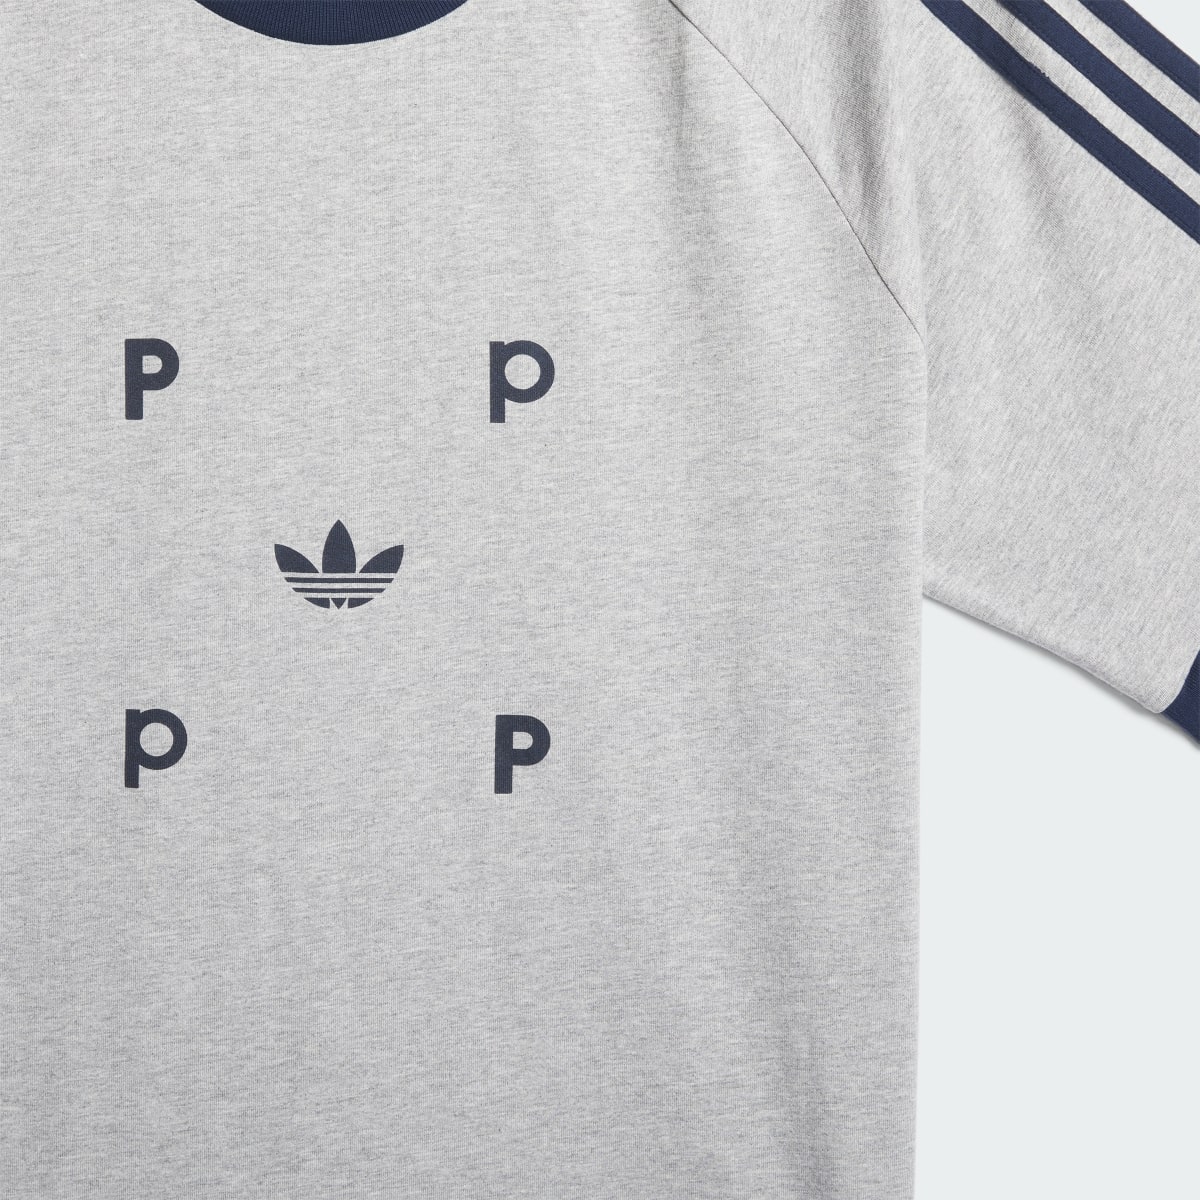 Adidas T-shirt Pop Classic. 4